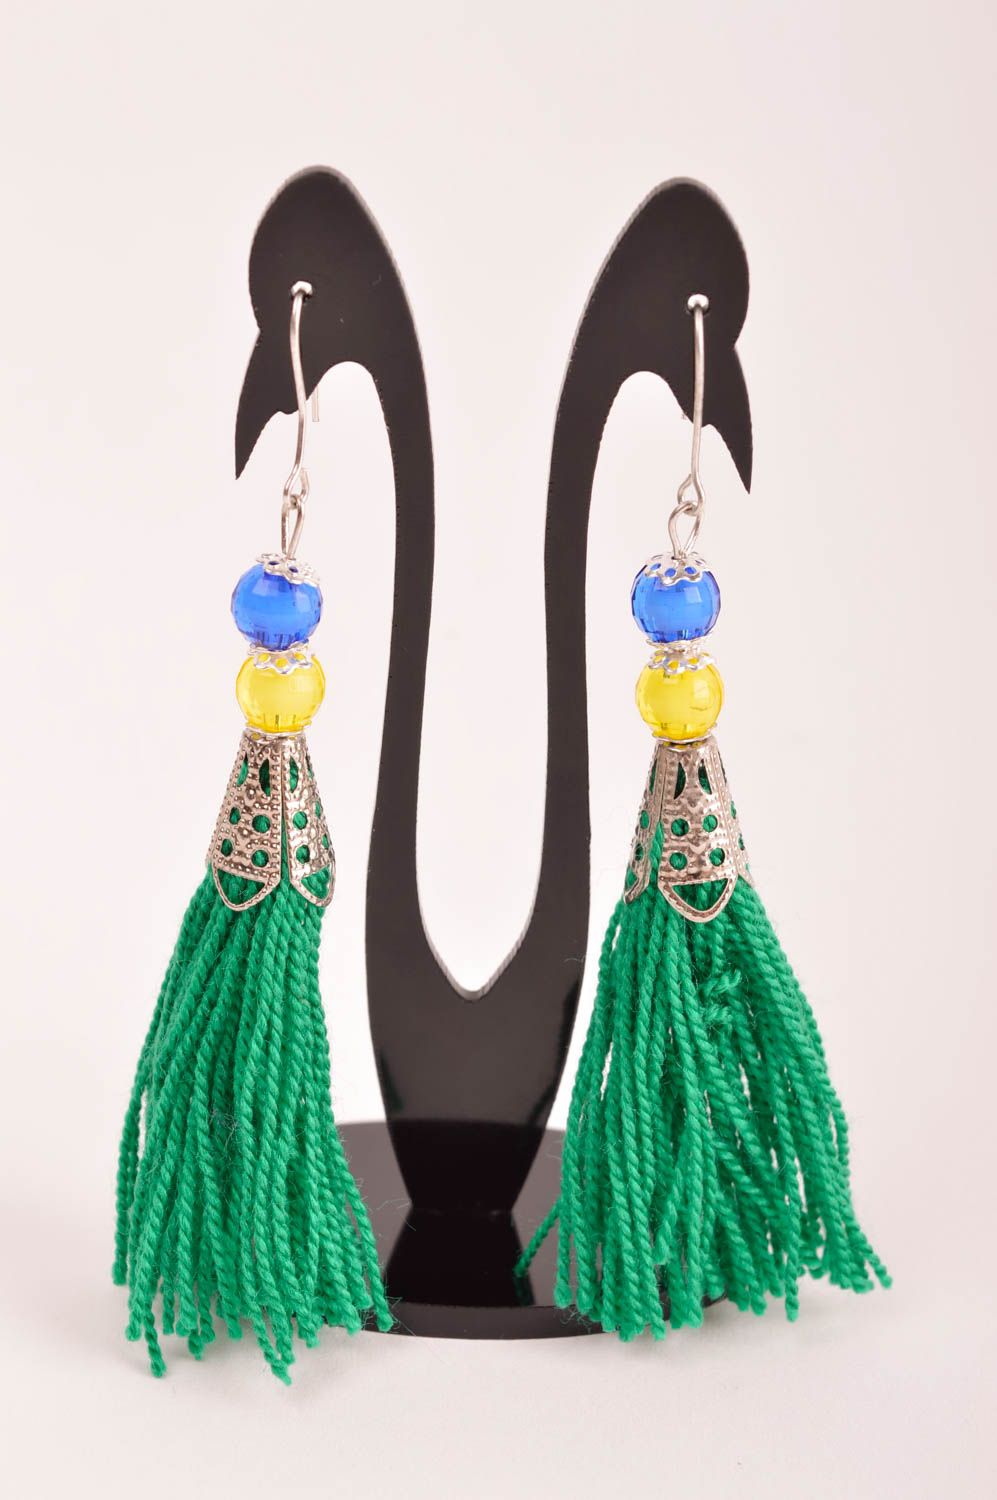 Handmade tassel earrings thread earrings textile jewelry designs gifts for her photo 2